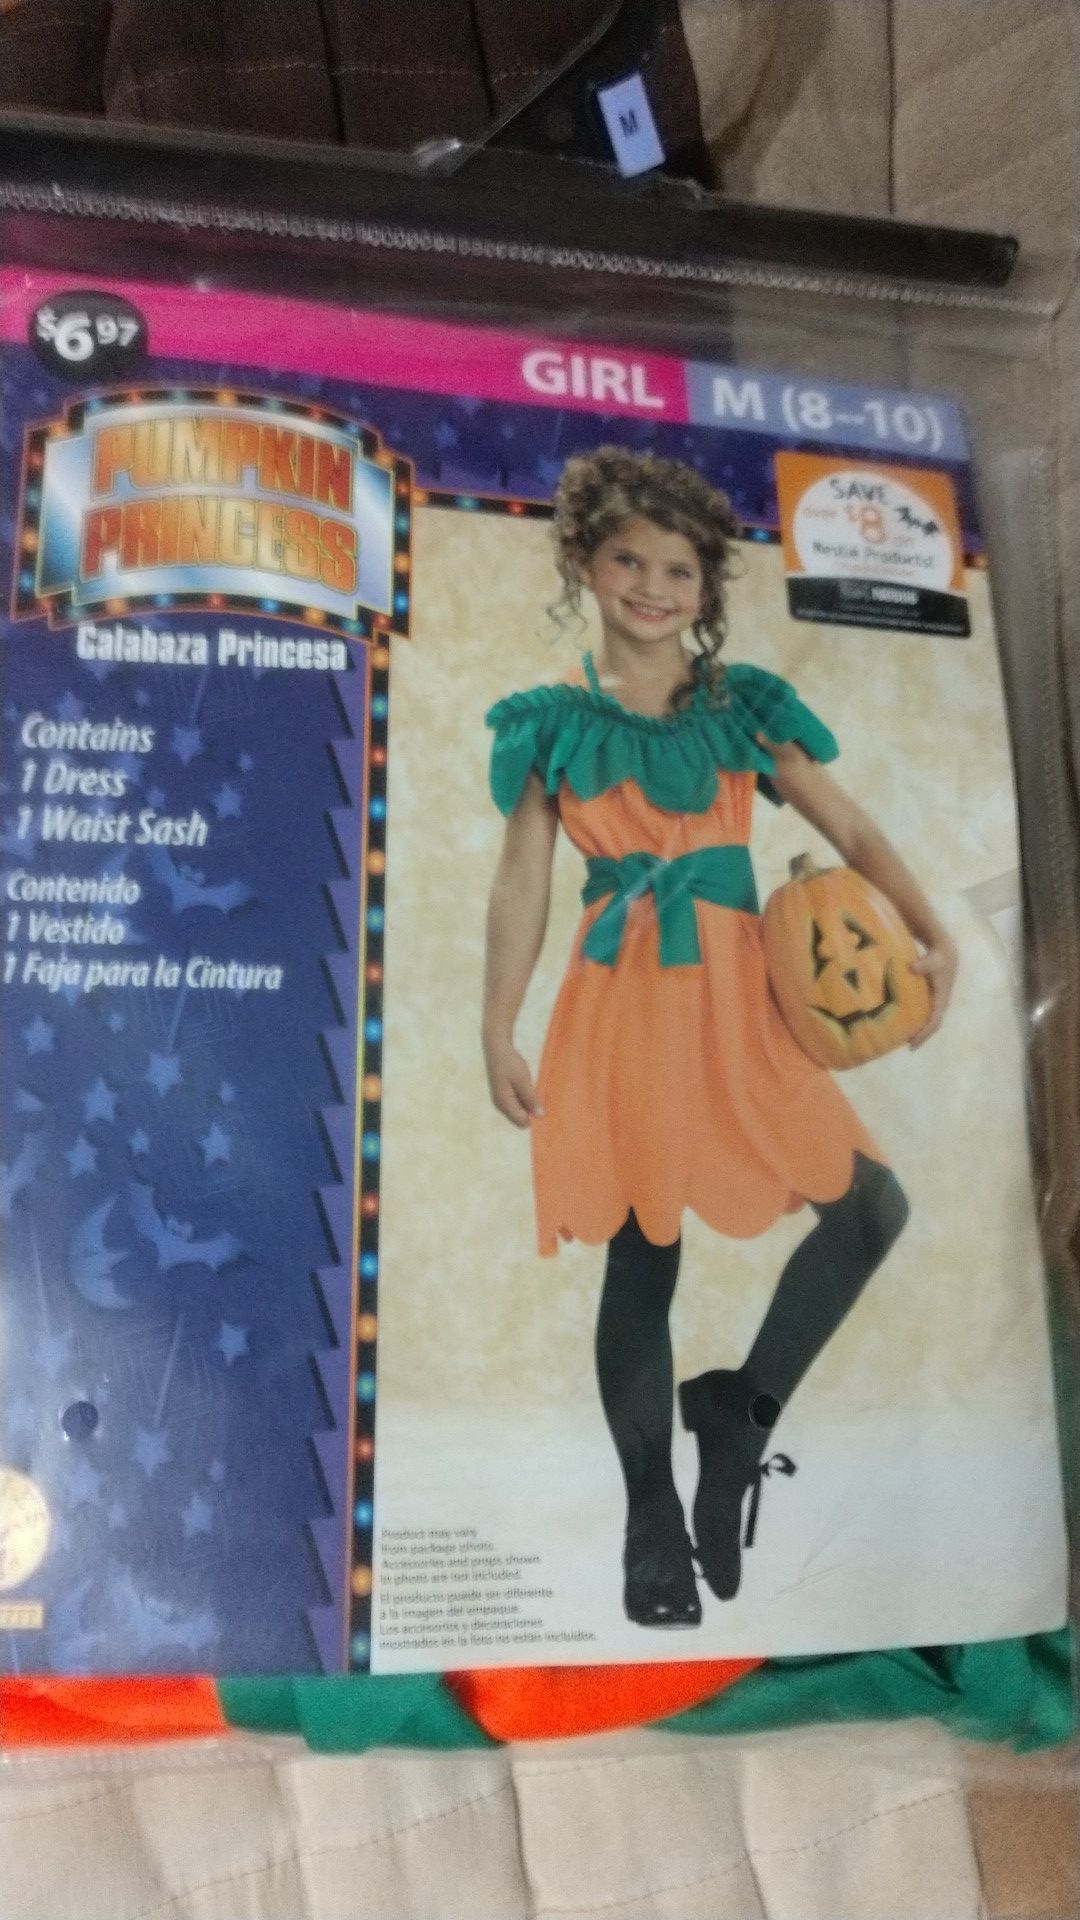 Halloween costume girl m(8-10)